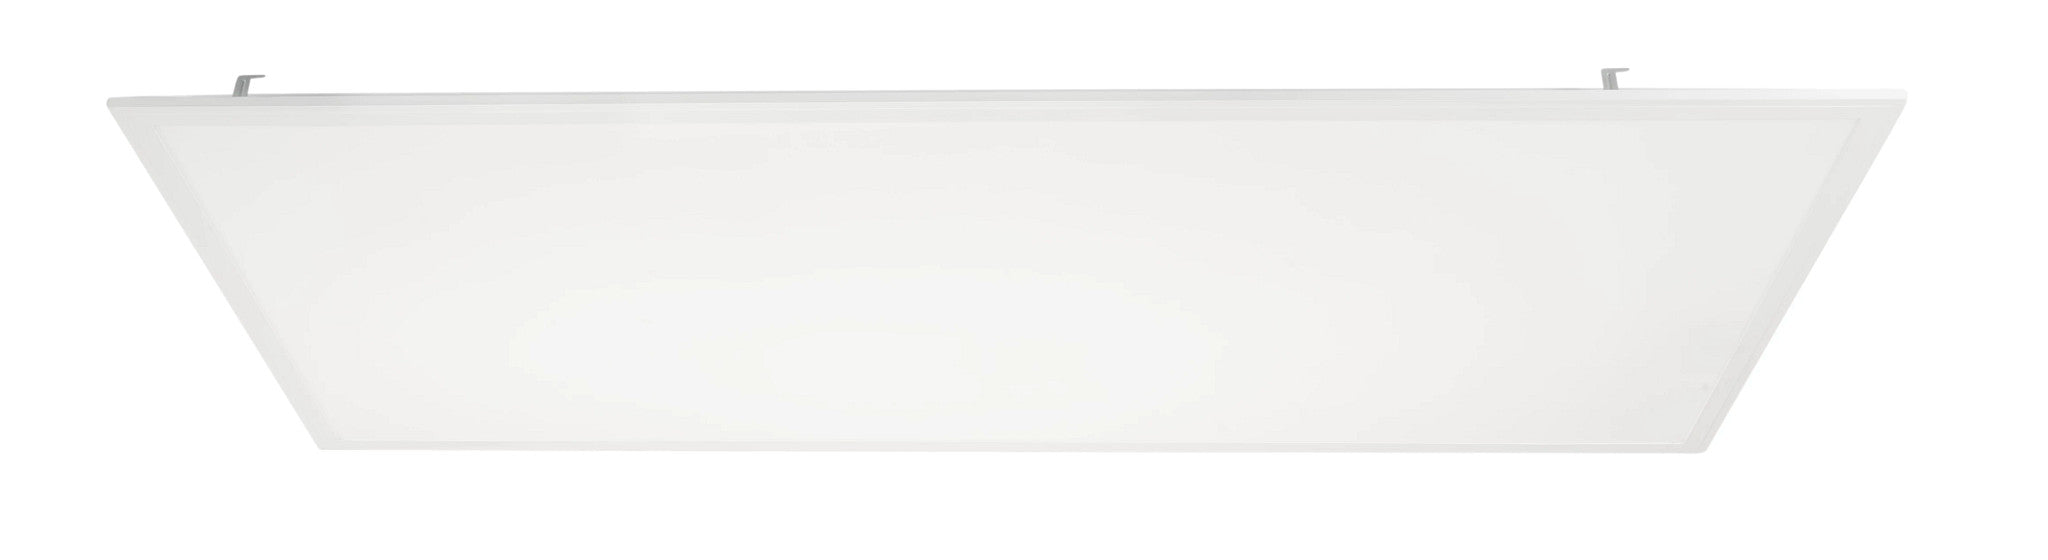 Keystone 2X4 LED Panel 40W 120-277V Input 4000K 0-10V Dimming Backlit Design Premium Series Generation 2 (KT-BPLED40-24-840-VDIM-P /G2)